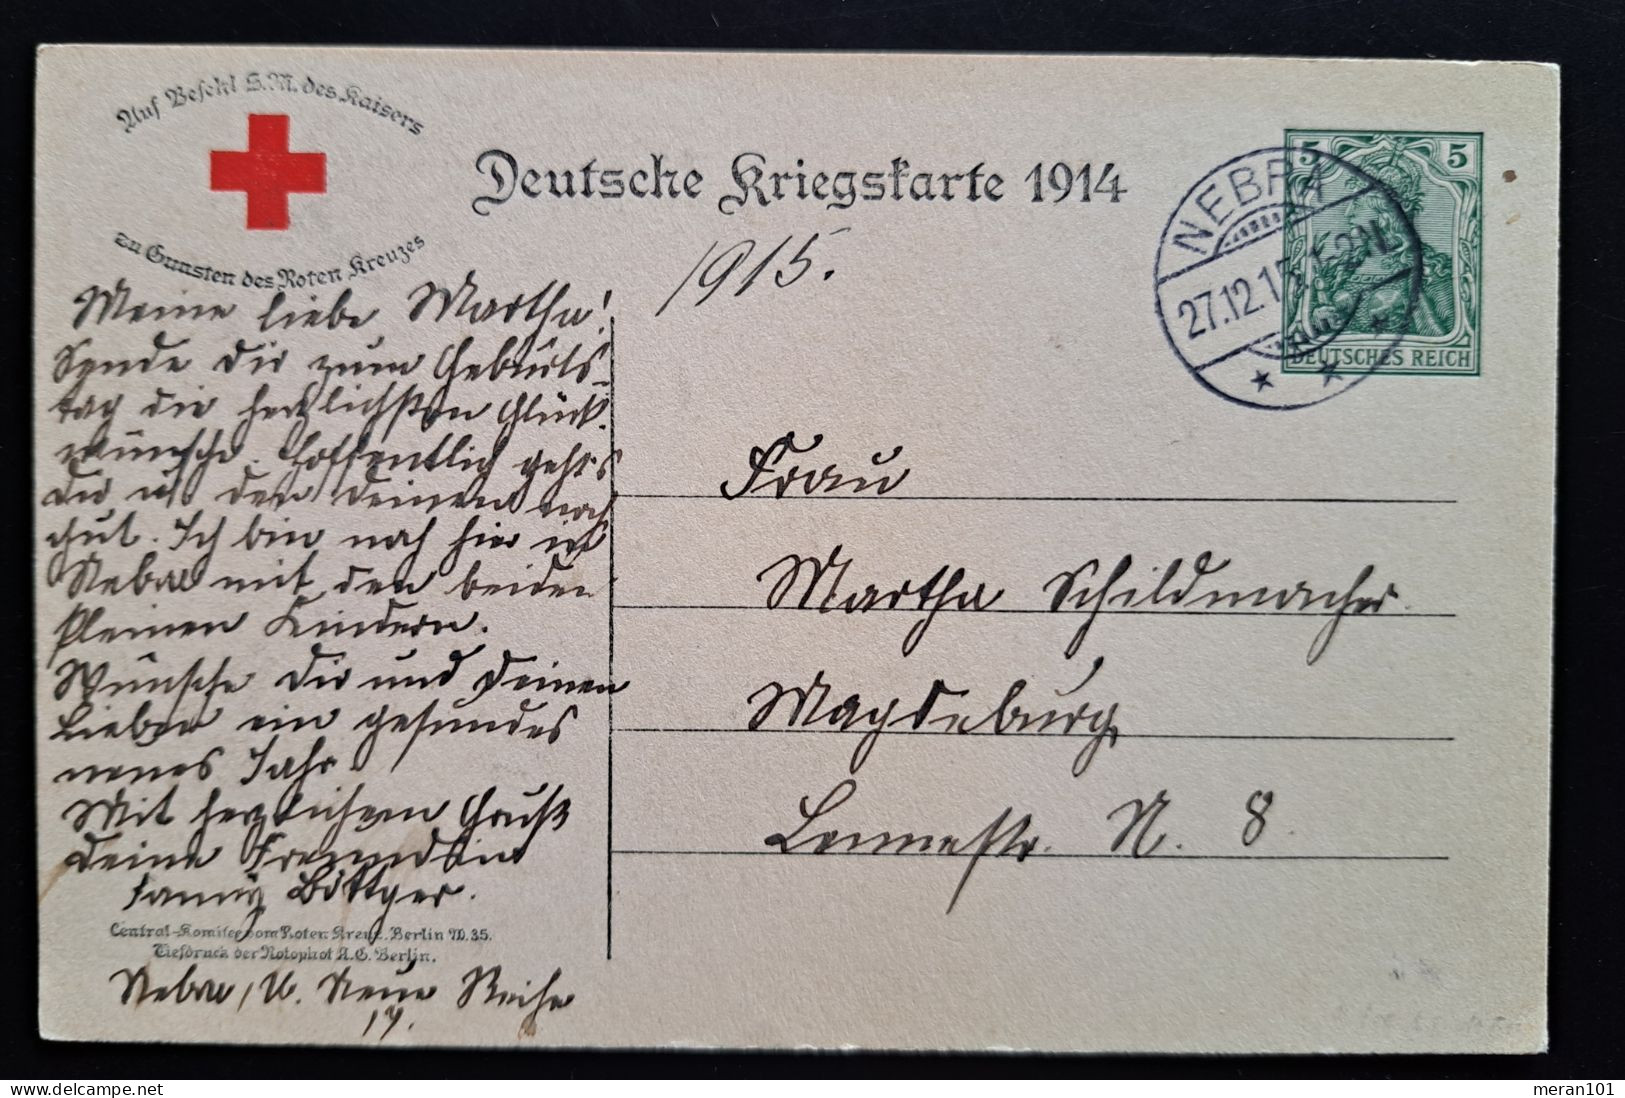 Deutsche Kriegskarte 1914, Postkarte P100A Type II, NEBRA 27.12.15 - Postkarten